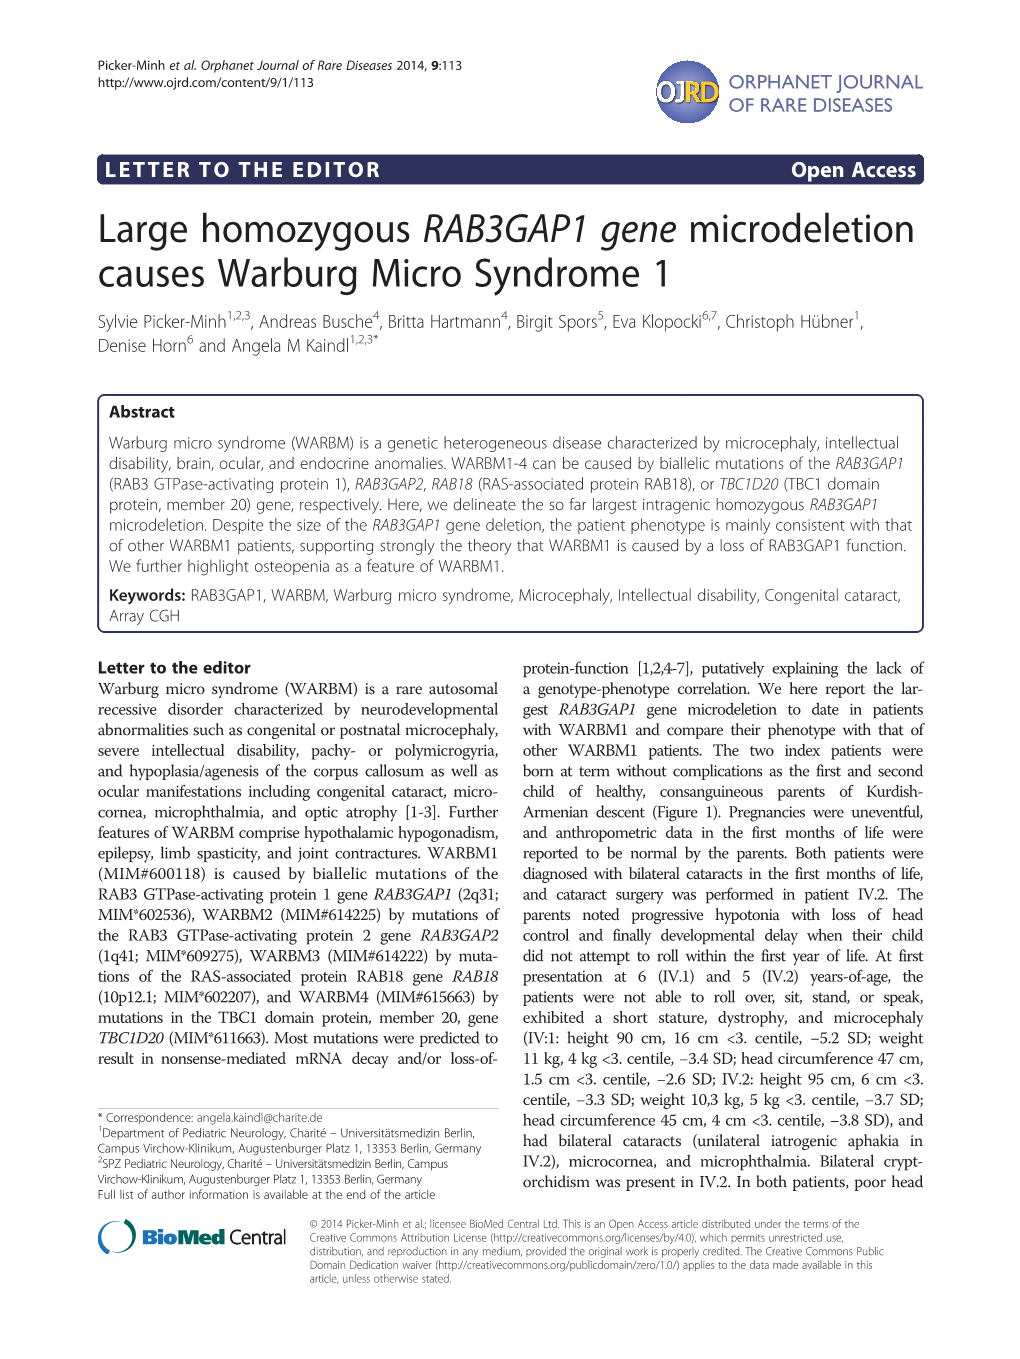 Large Homozygous RAB3GAP1 Gene Microdeletion Causes Warburg